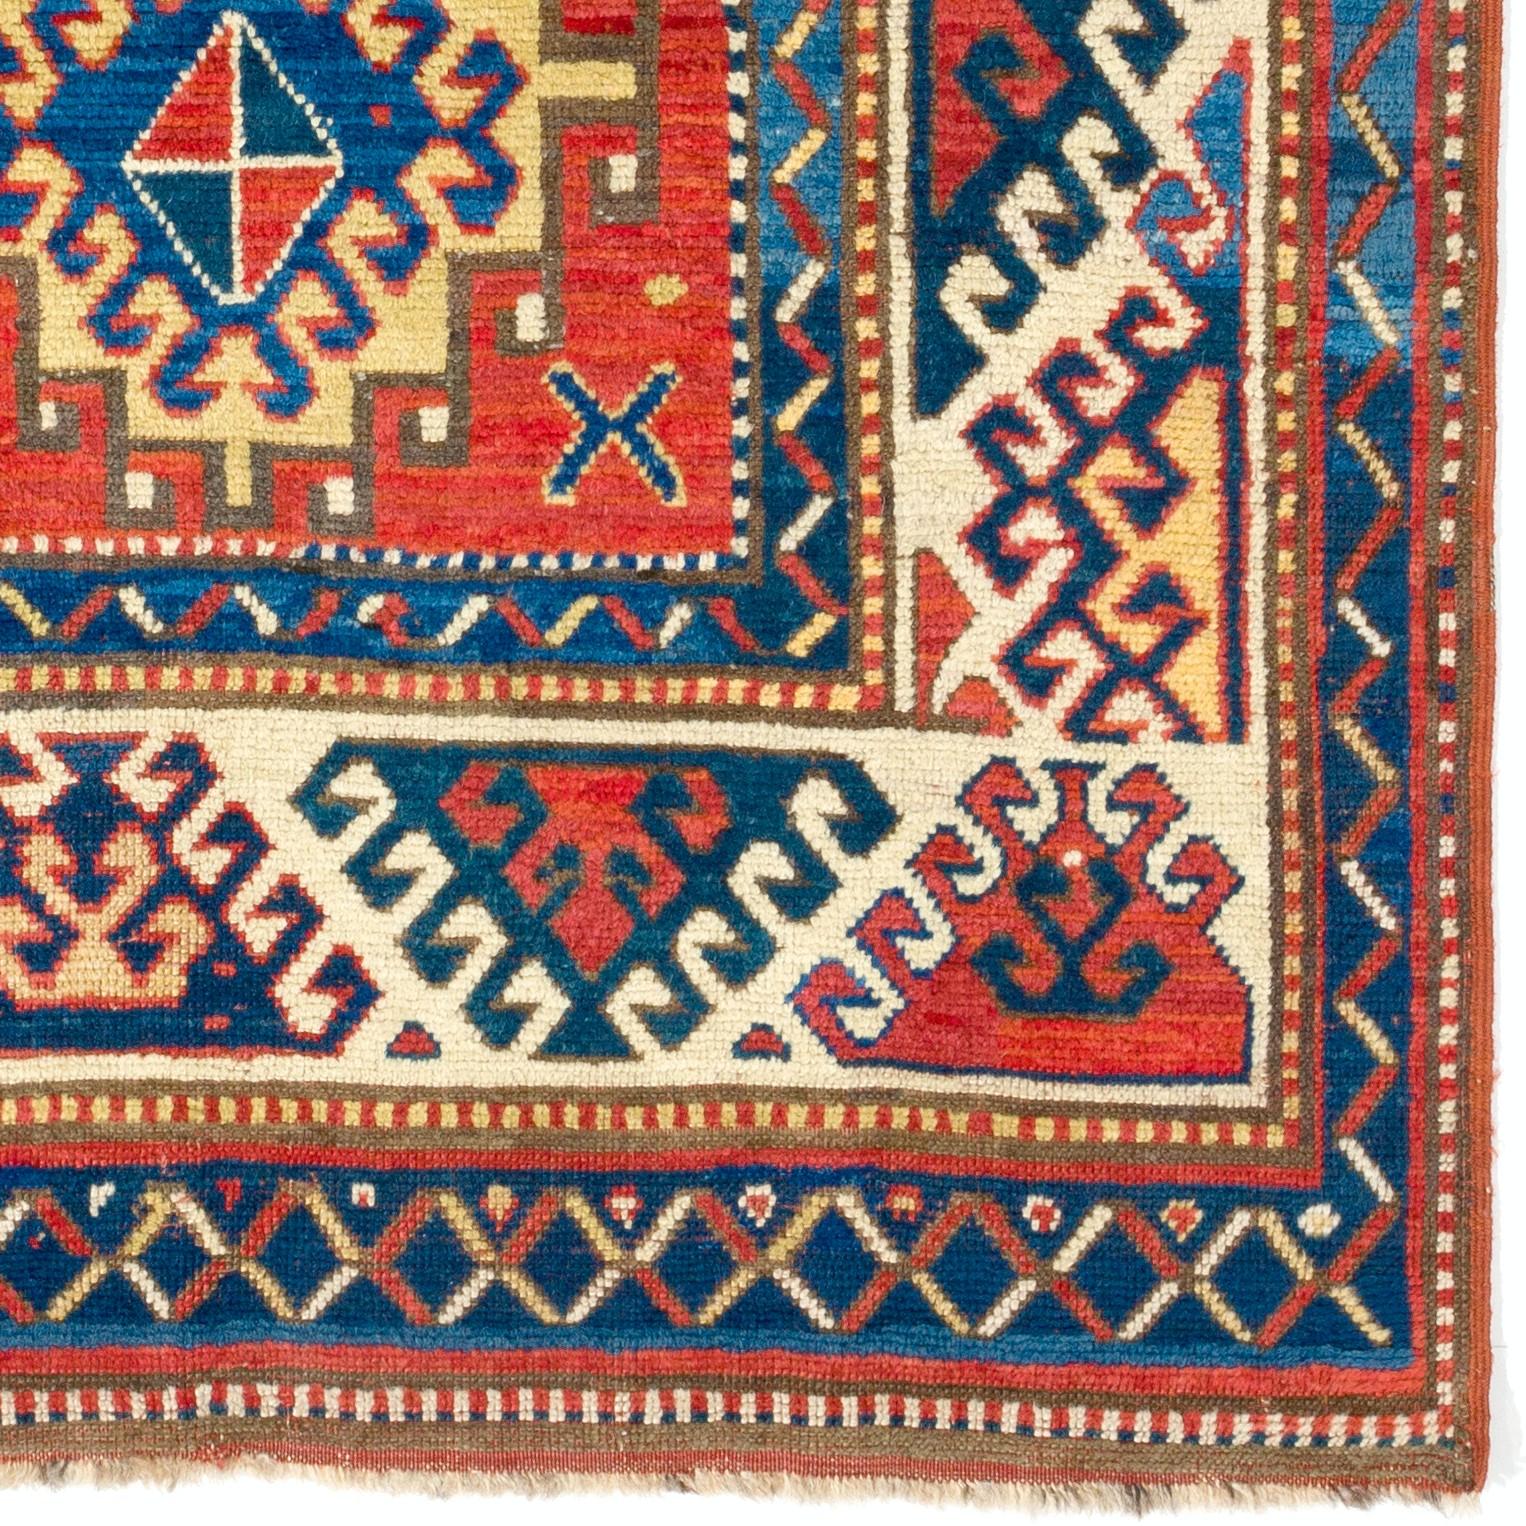 Dazzling antique Caucasian Bordjalou Kazak rug. Ca 1870. 
Medium wool pile on wool foundation. 
Very good condition, washed professionally. 
Measures: 4 x 7.3 ft.